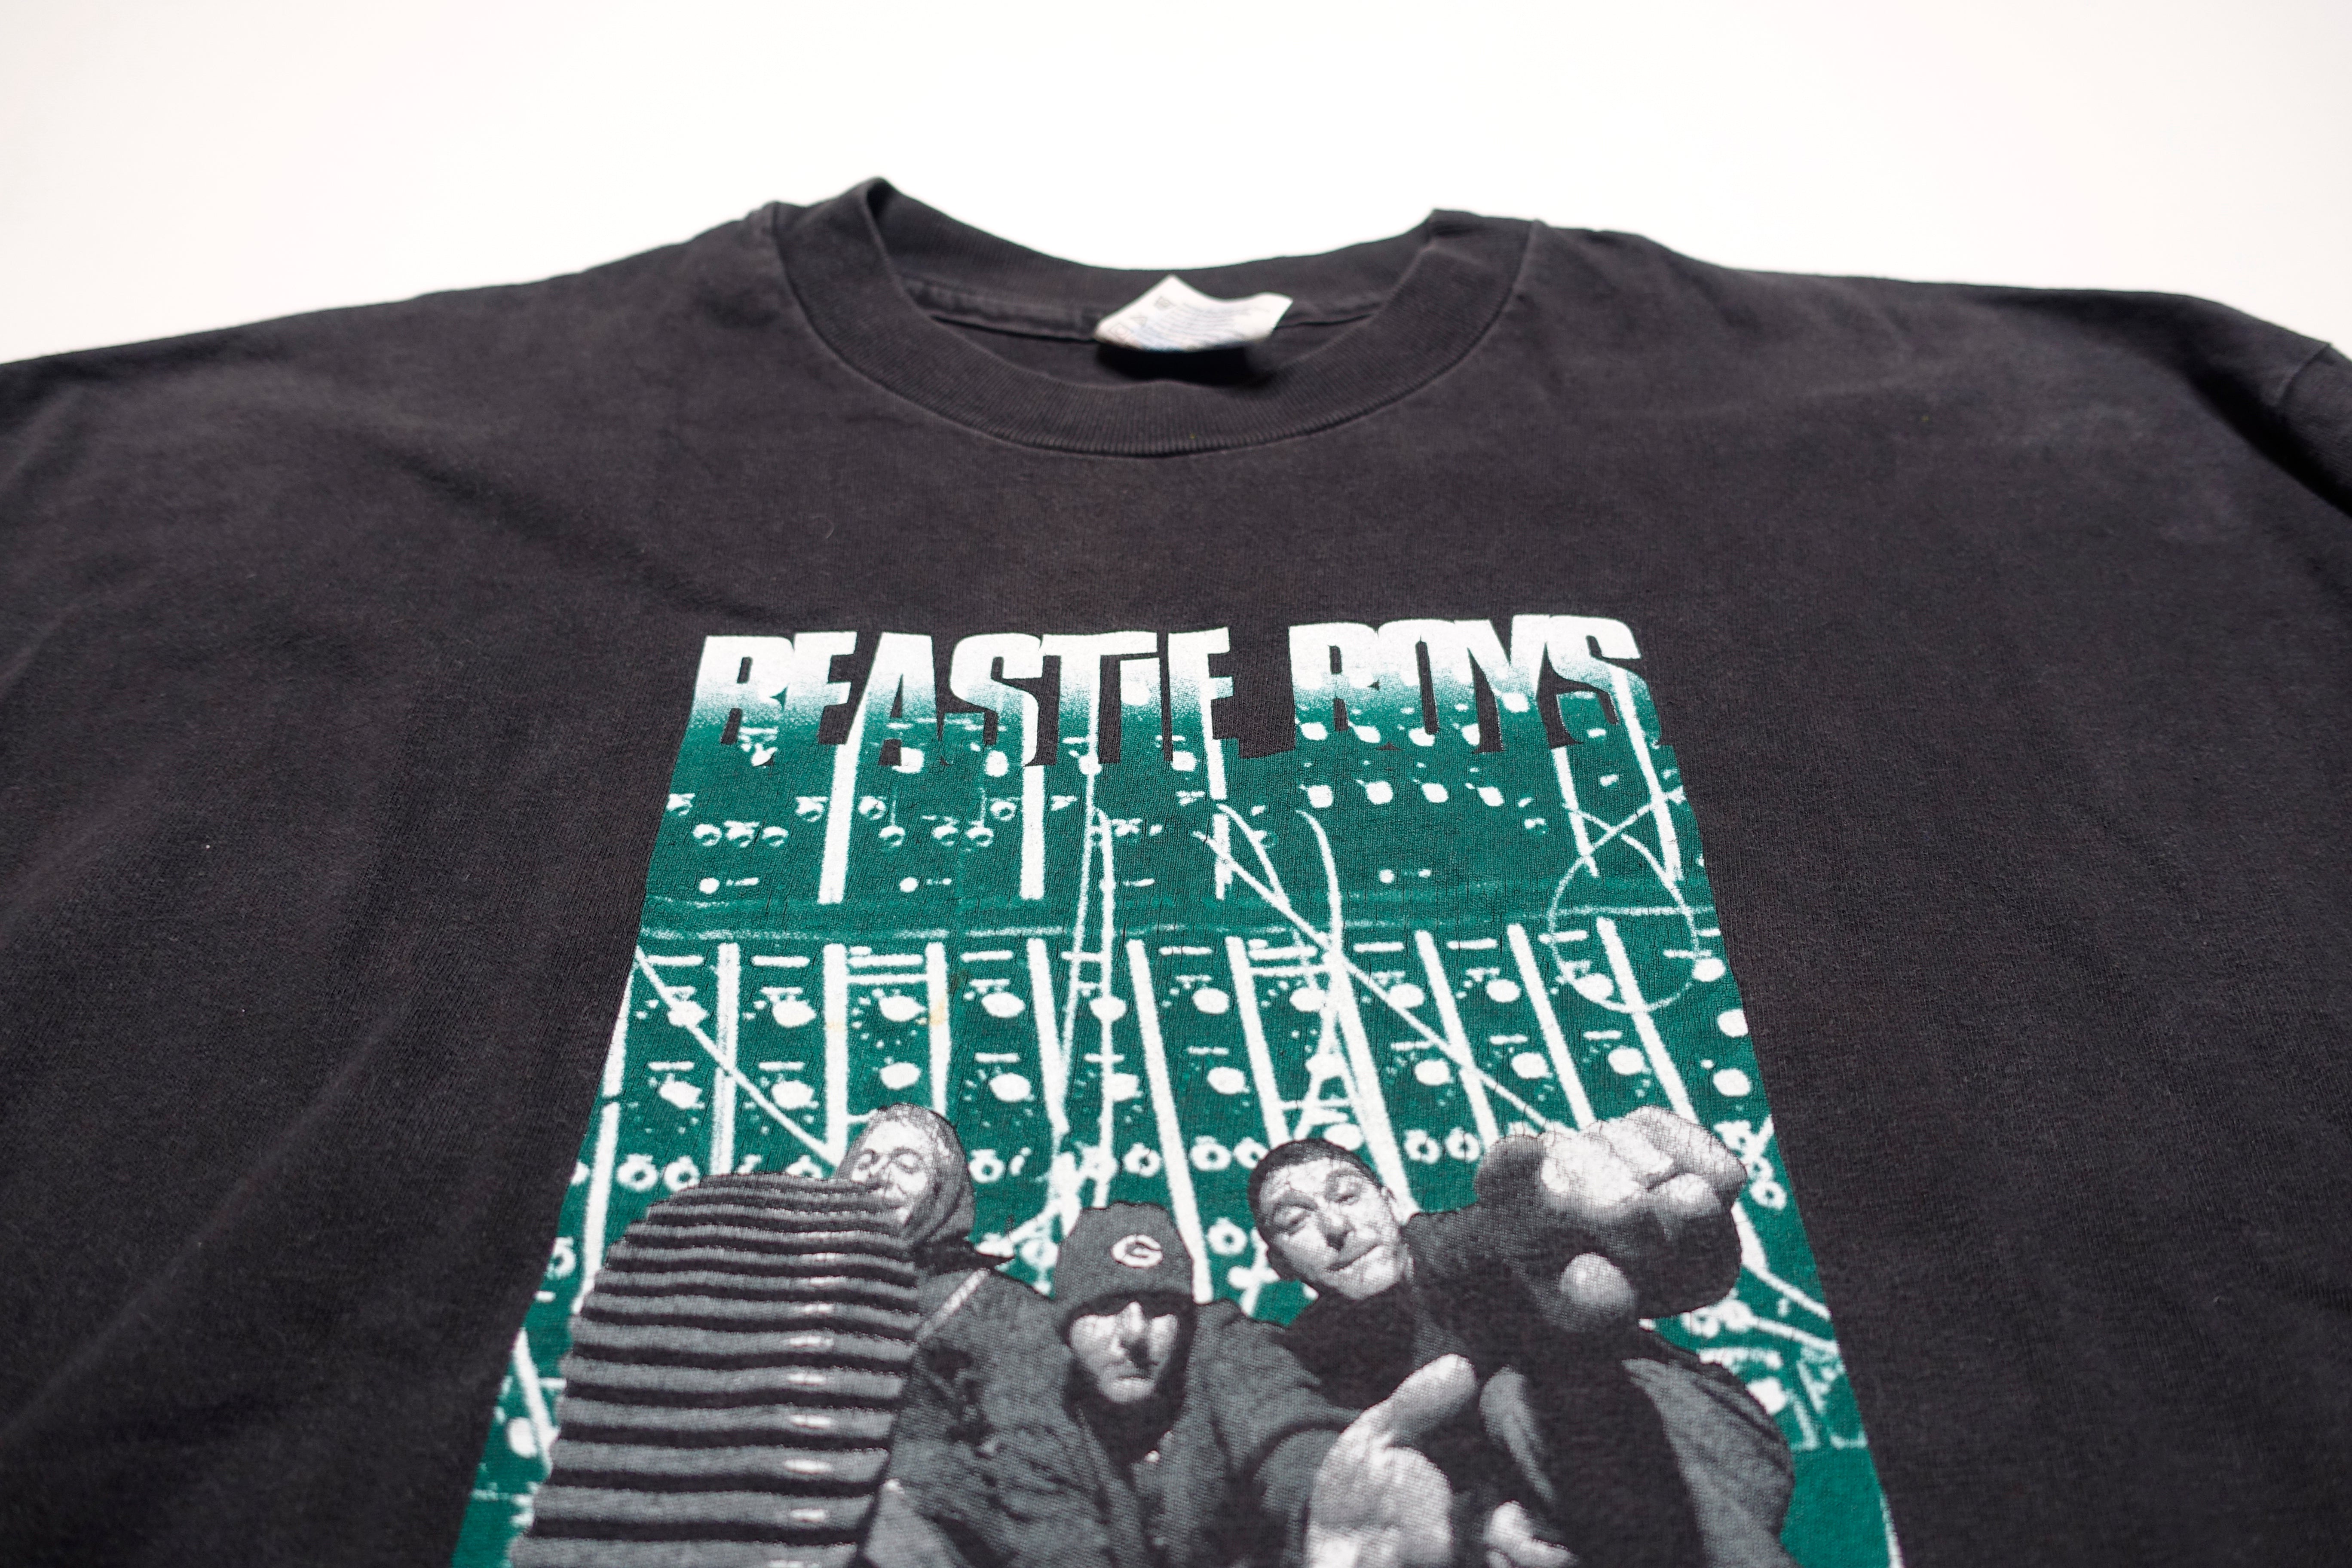 Beastie Boys - Sure Shot / Ill Communication 1994 Tour Shirt Size XL